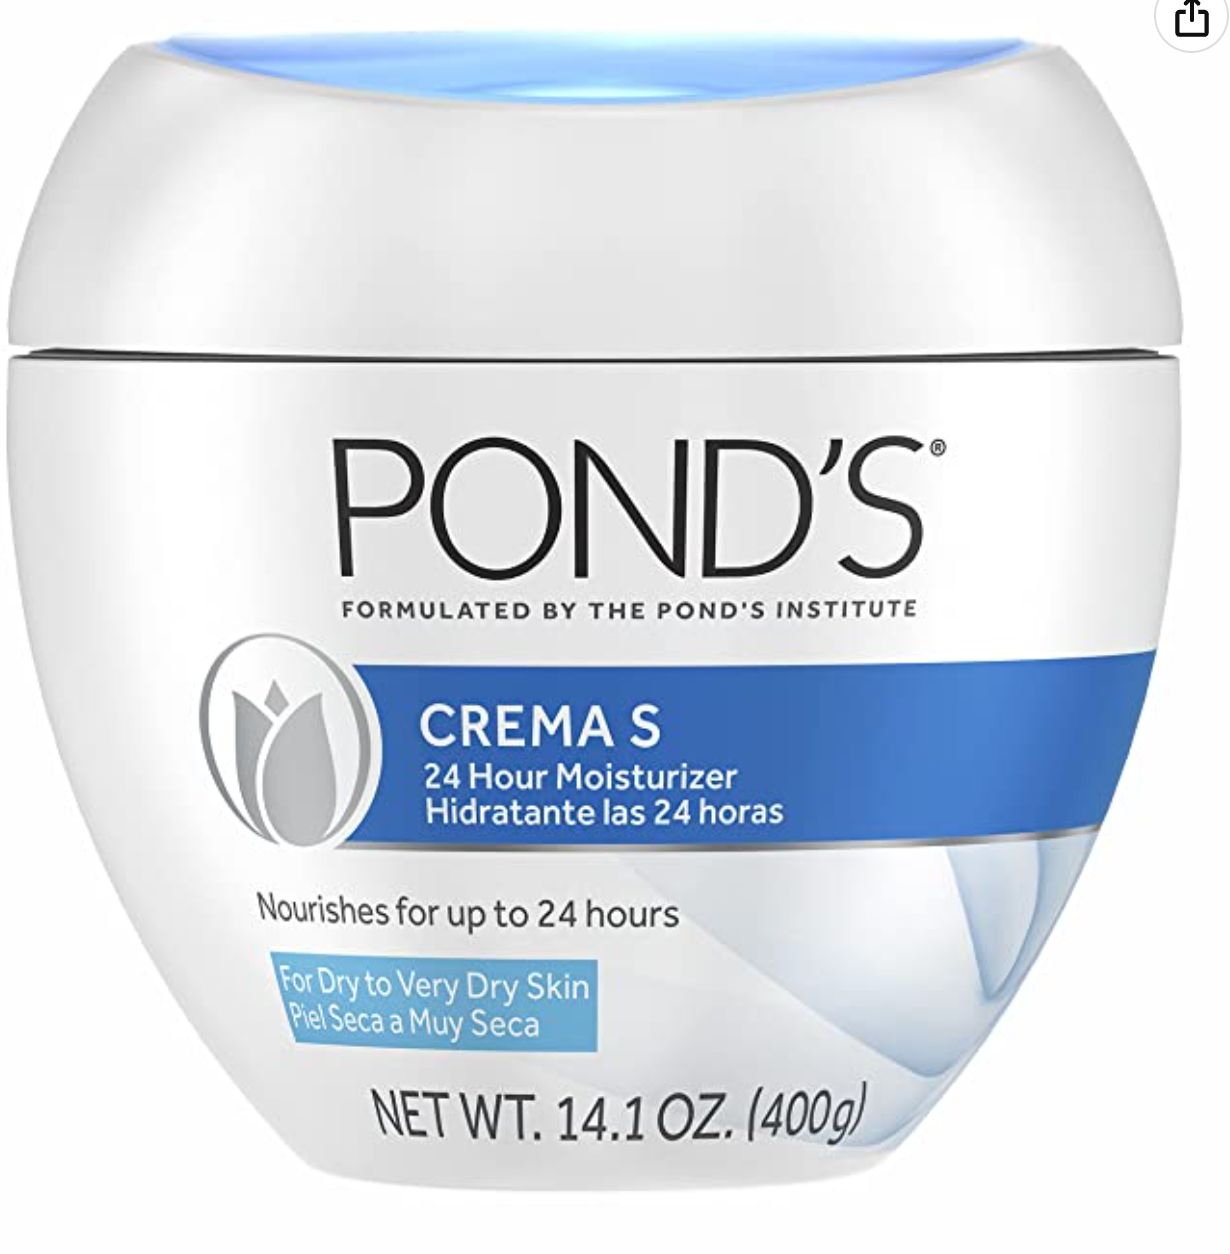 ponds cream